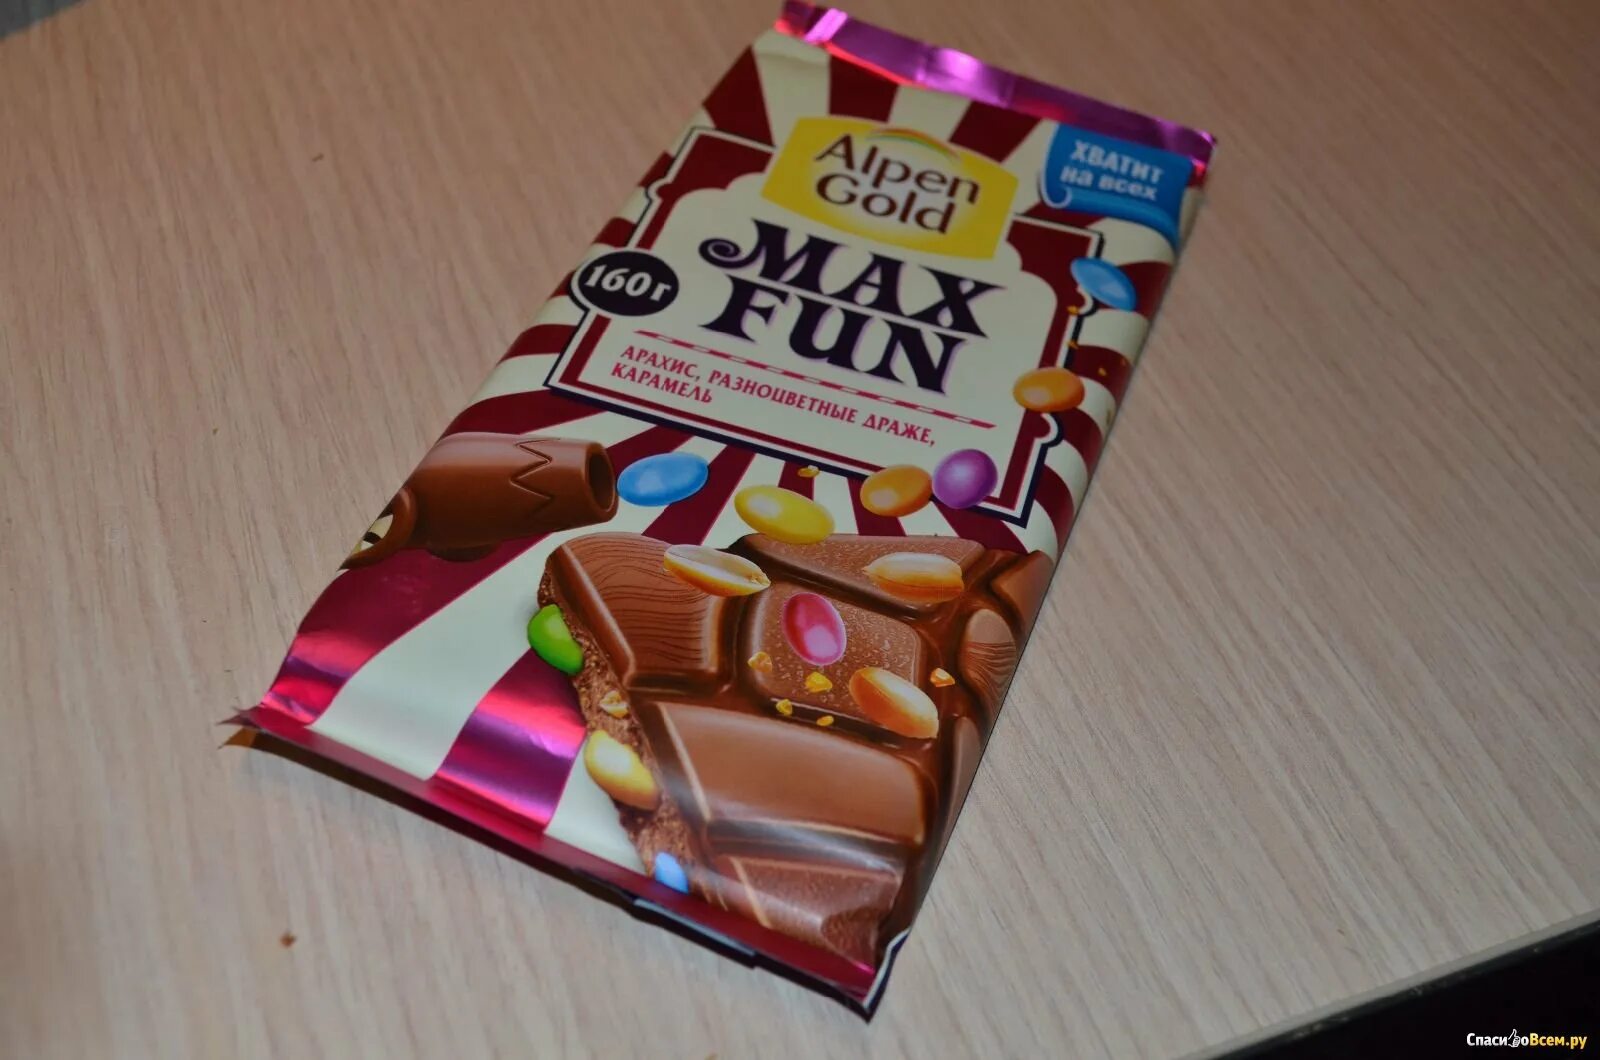 Fun mix. Шоколад Альпен Гольд Макс. Альпен Гольд Max fun. Шоколад Альпен Голд МАКСФАН. Шоколадка Альпен Гольд Макс фан.